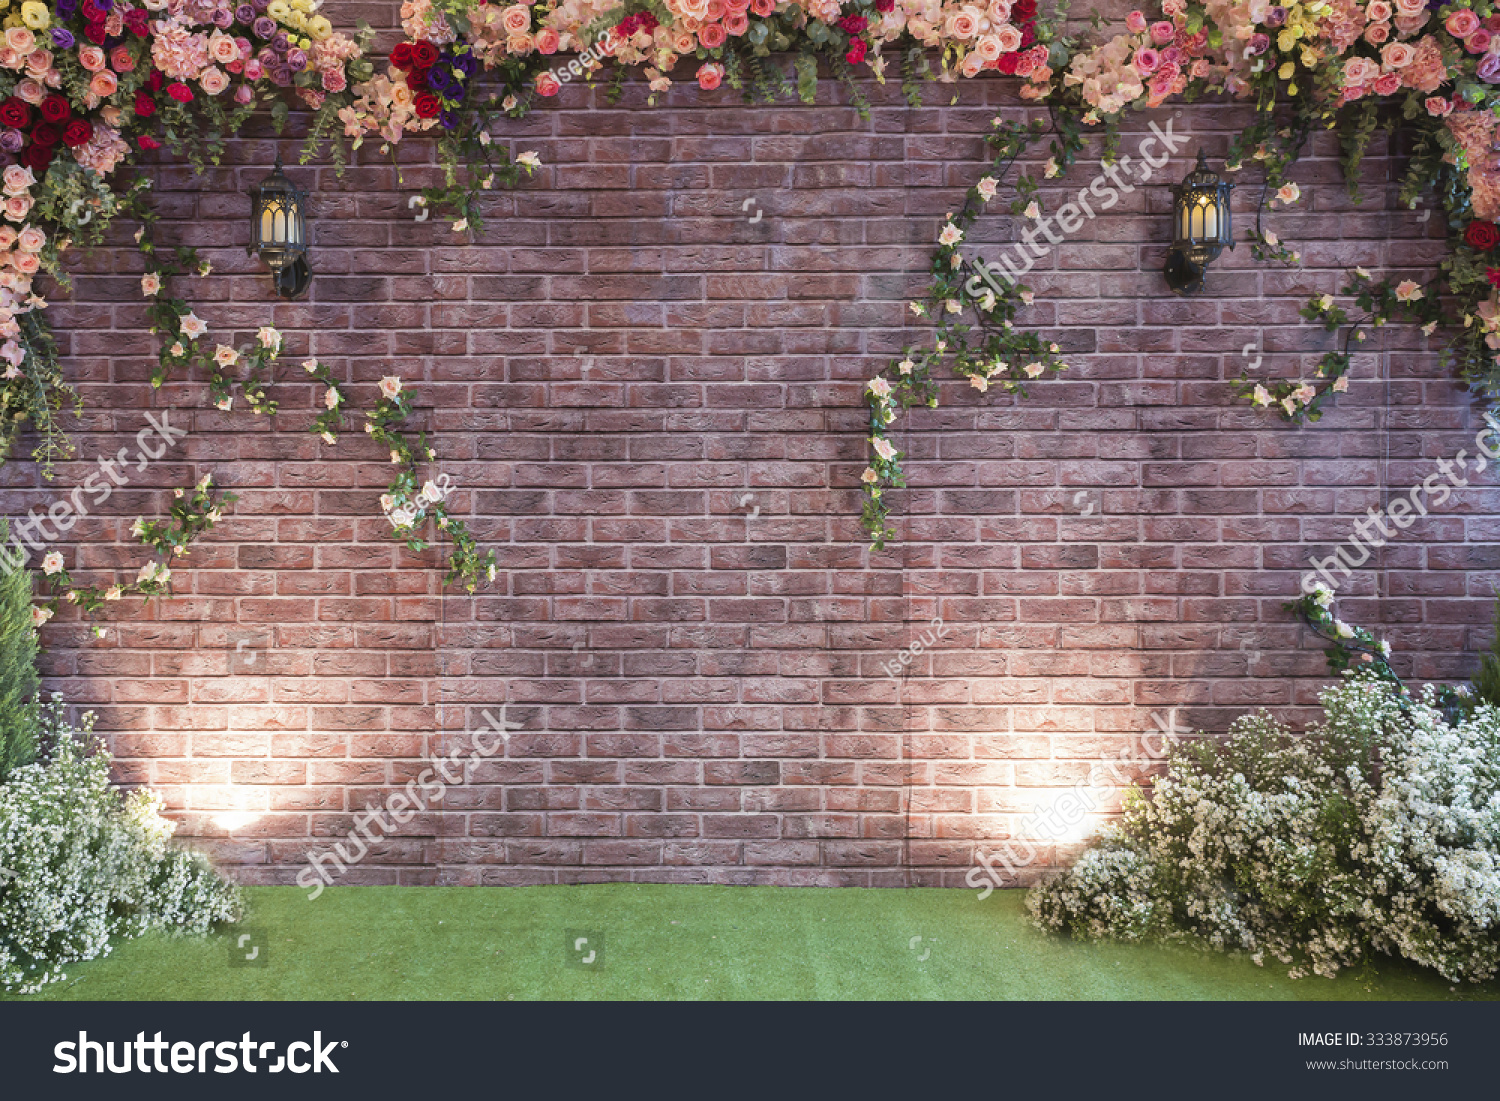 21,814 Formal backdrop Images, Stock Photos & Vectors | Shutterstock